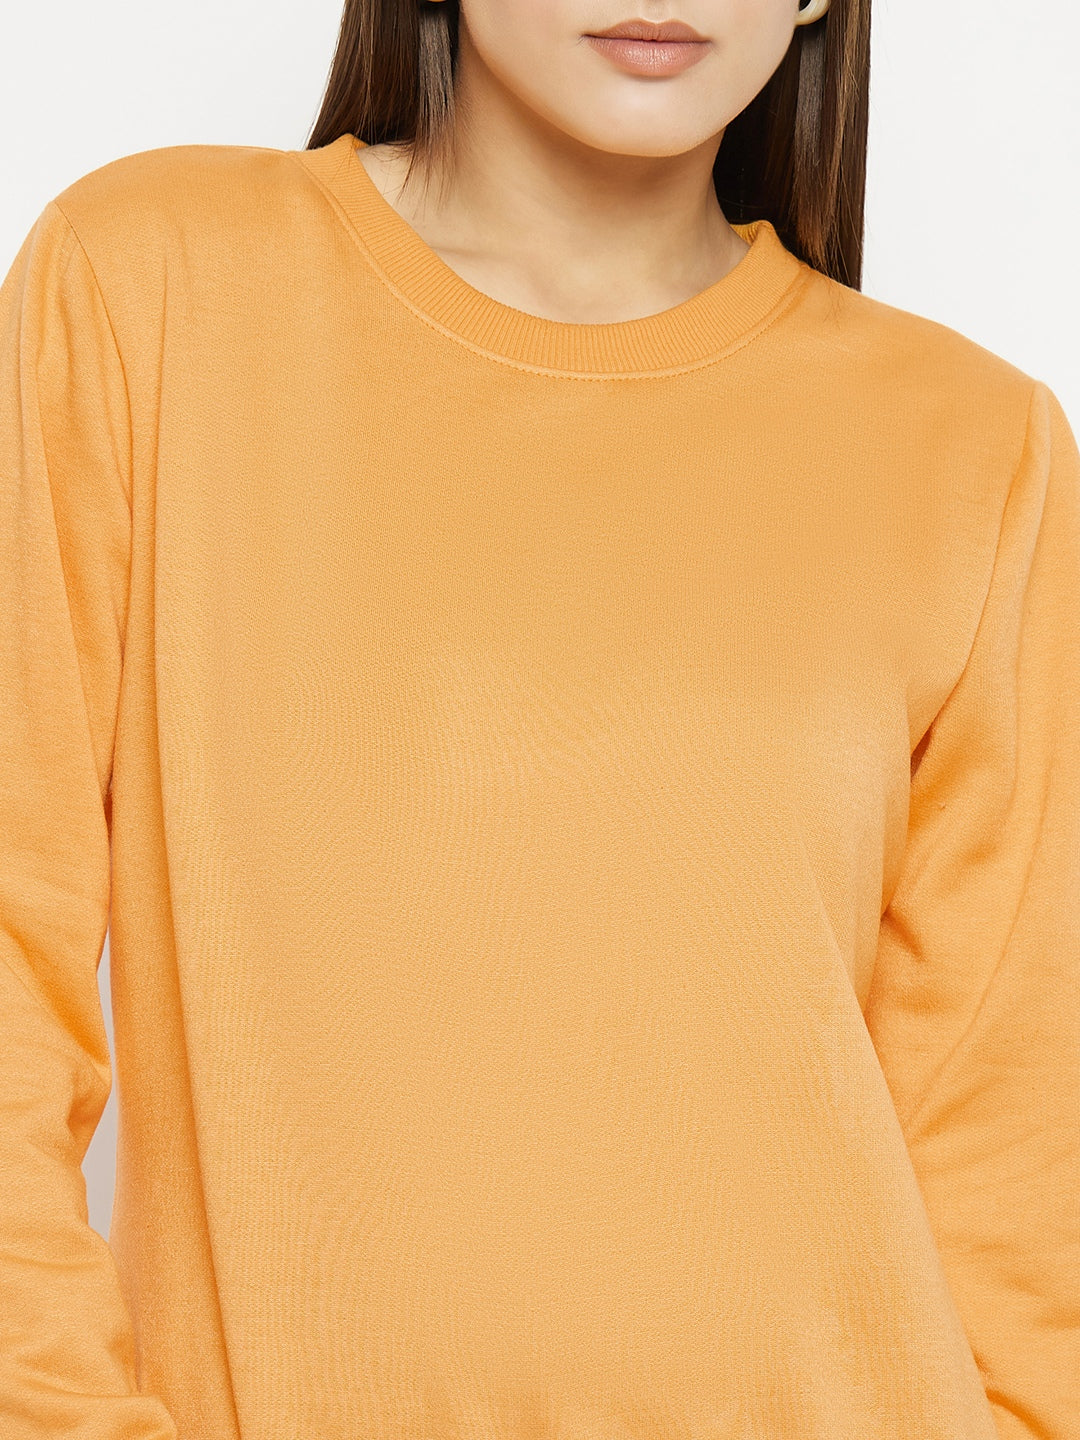 Women's Mustard Sweatshirt